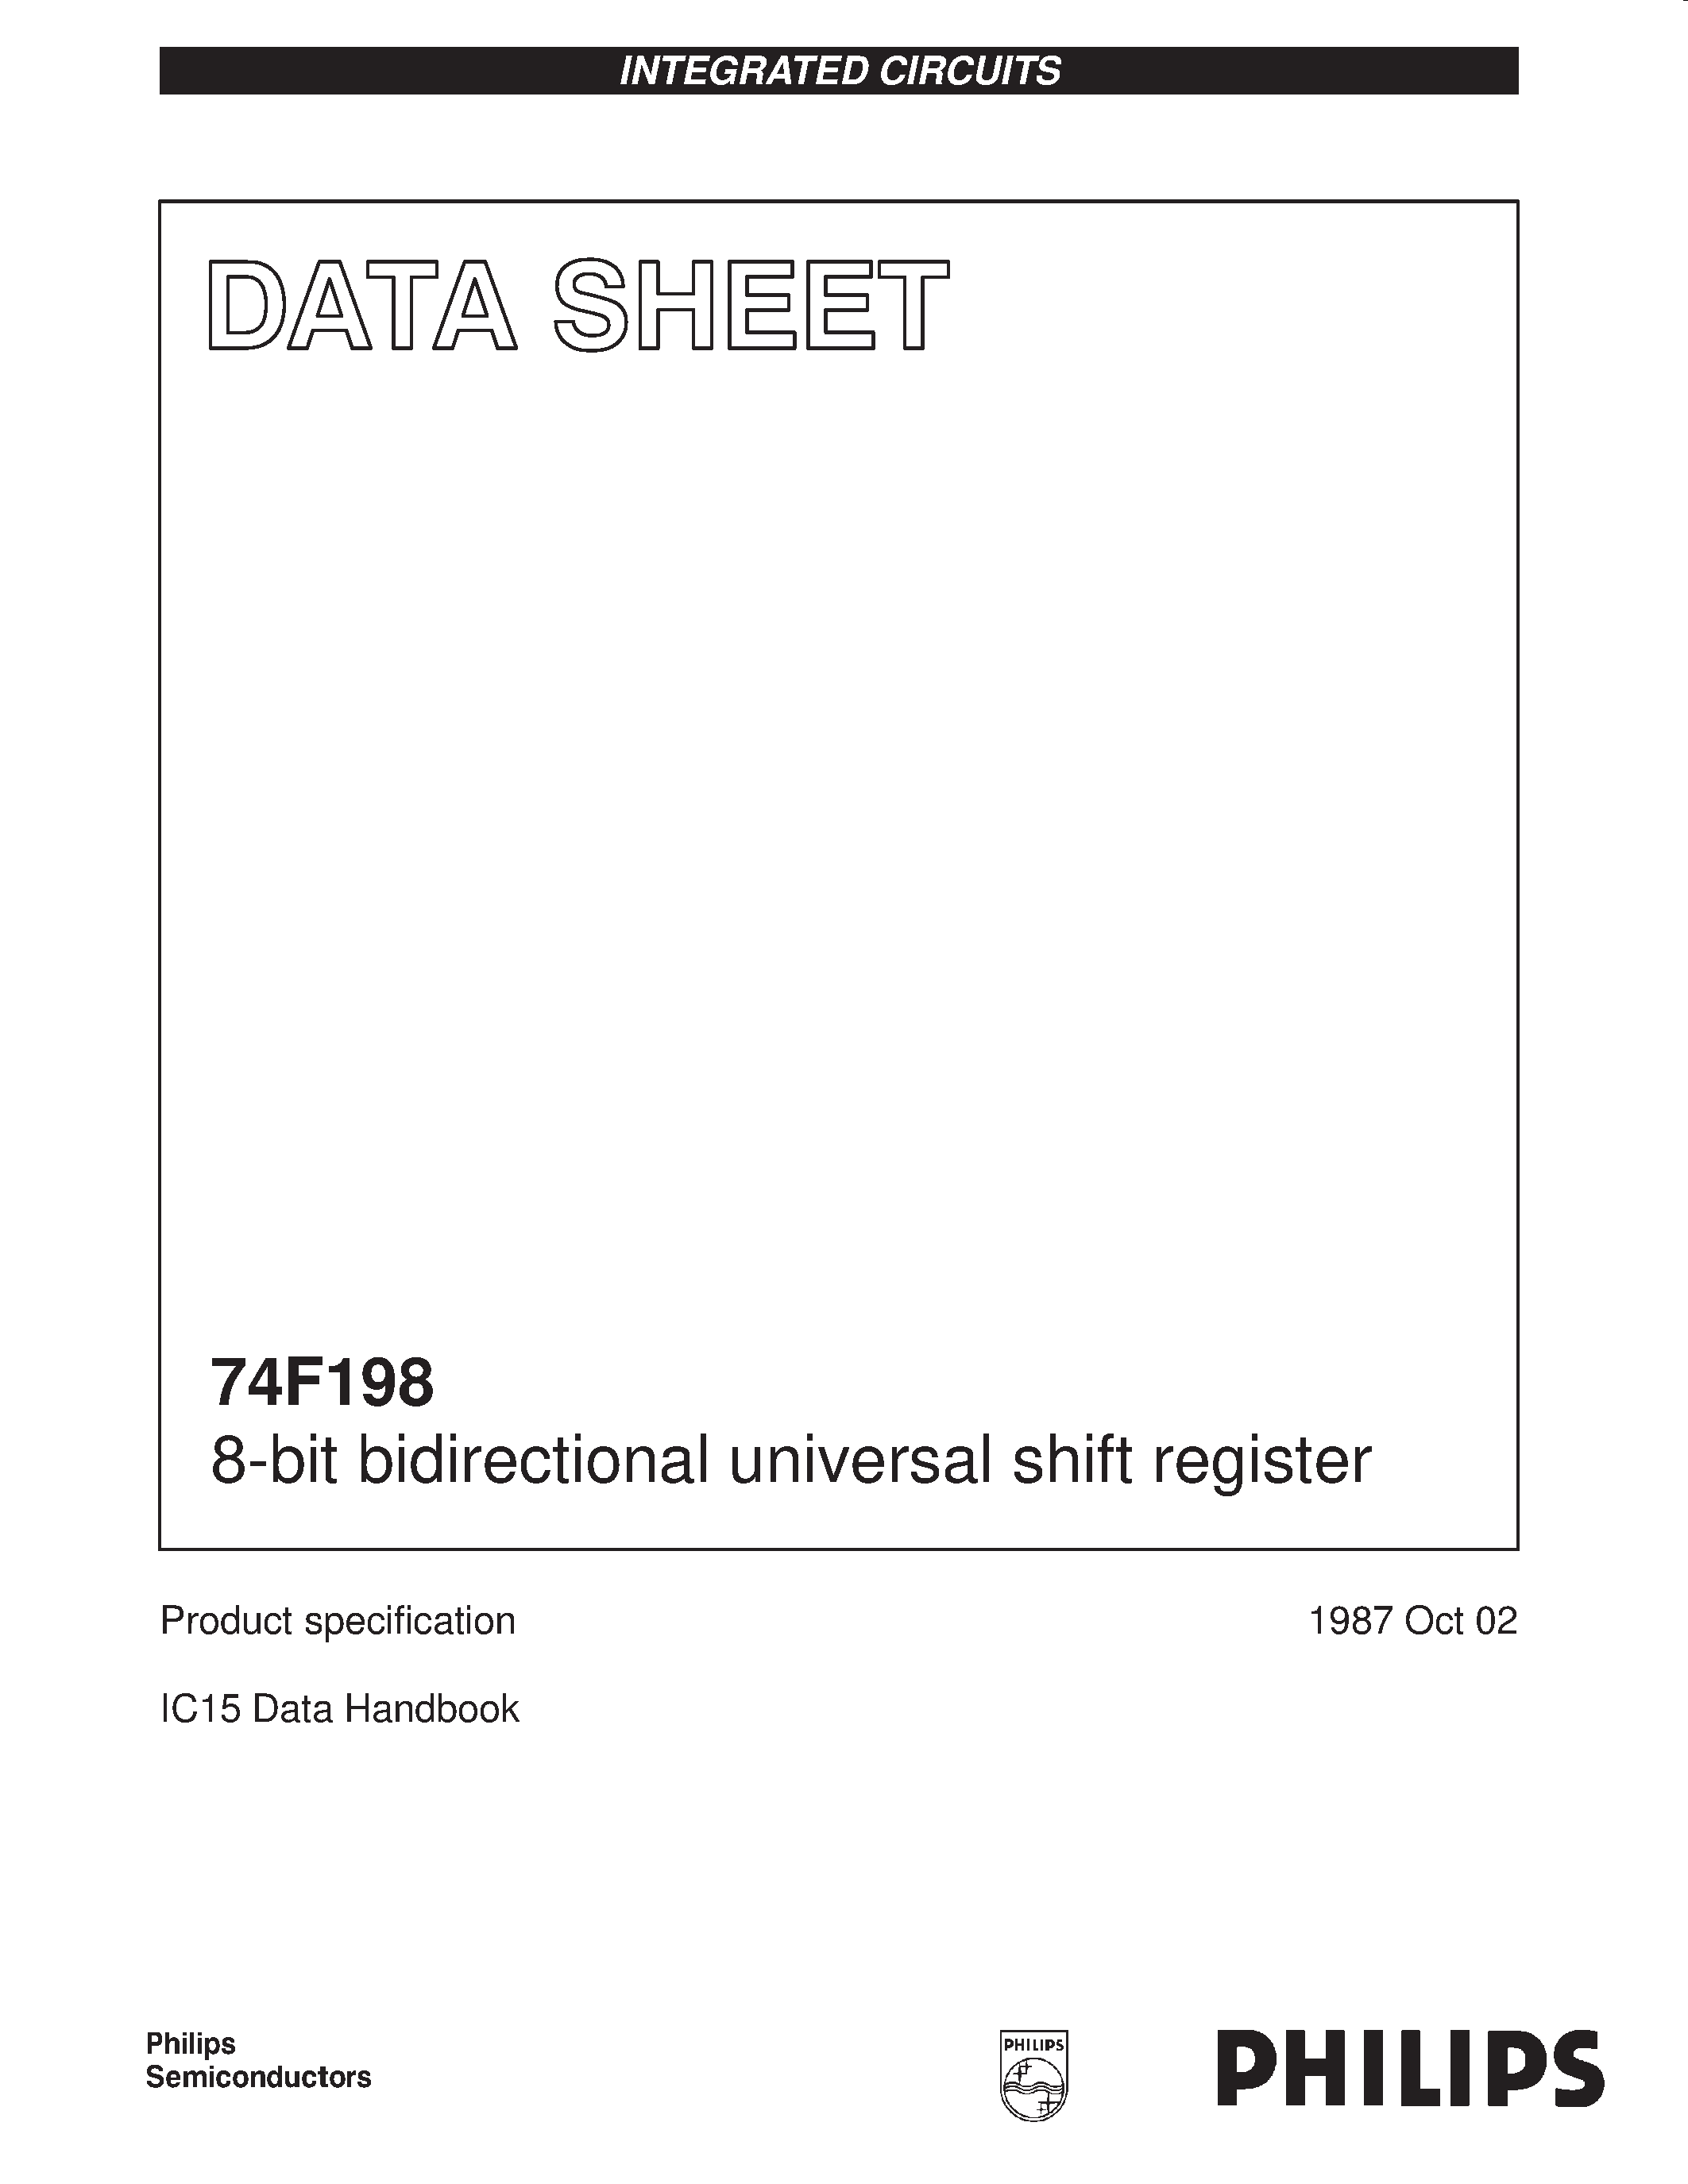 Datasheet 74F198 - 8-bit bidirectional universal shift register page 1